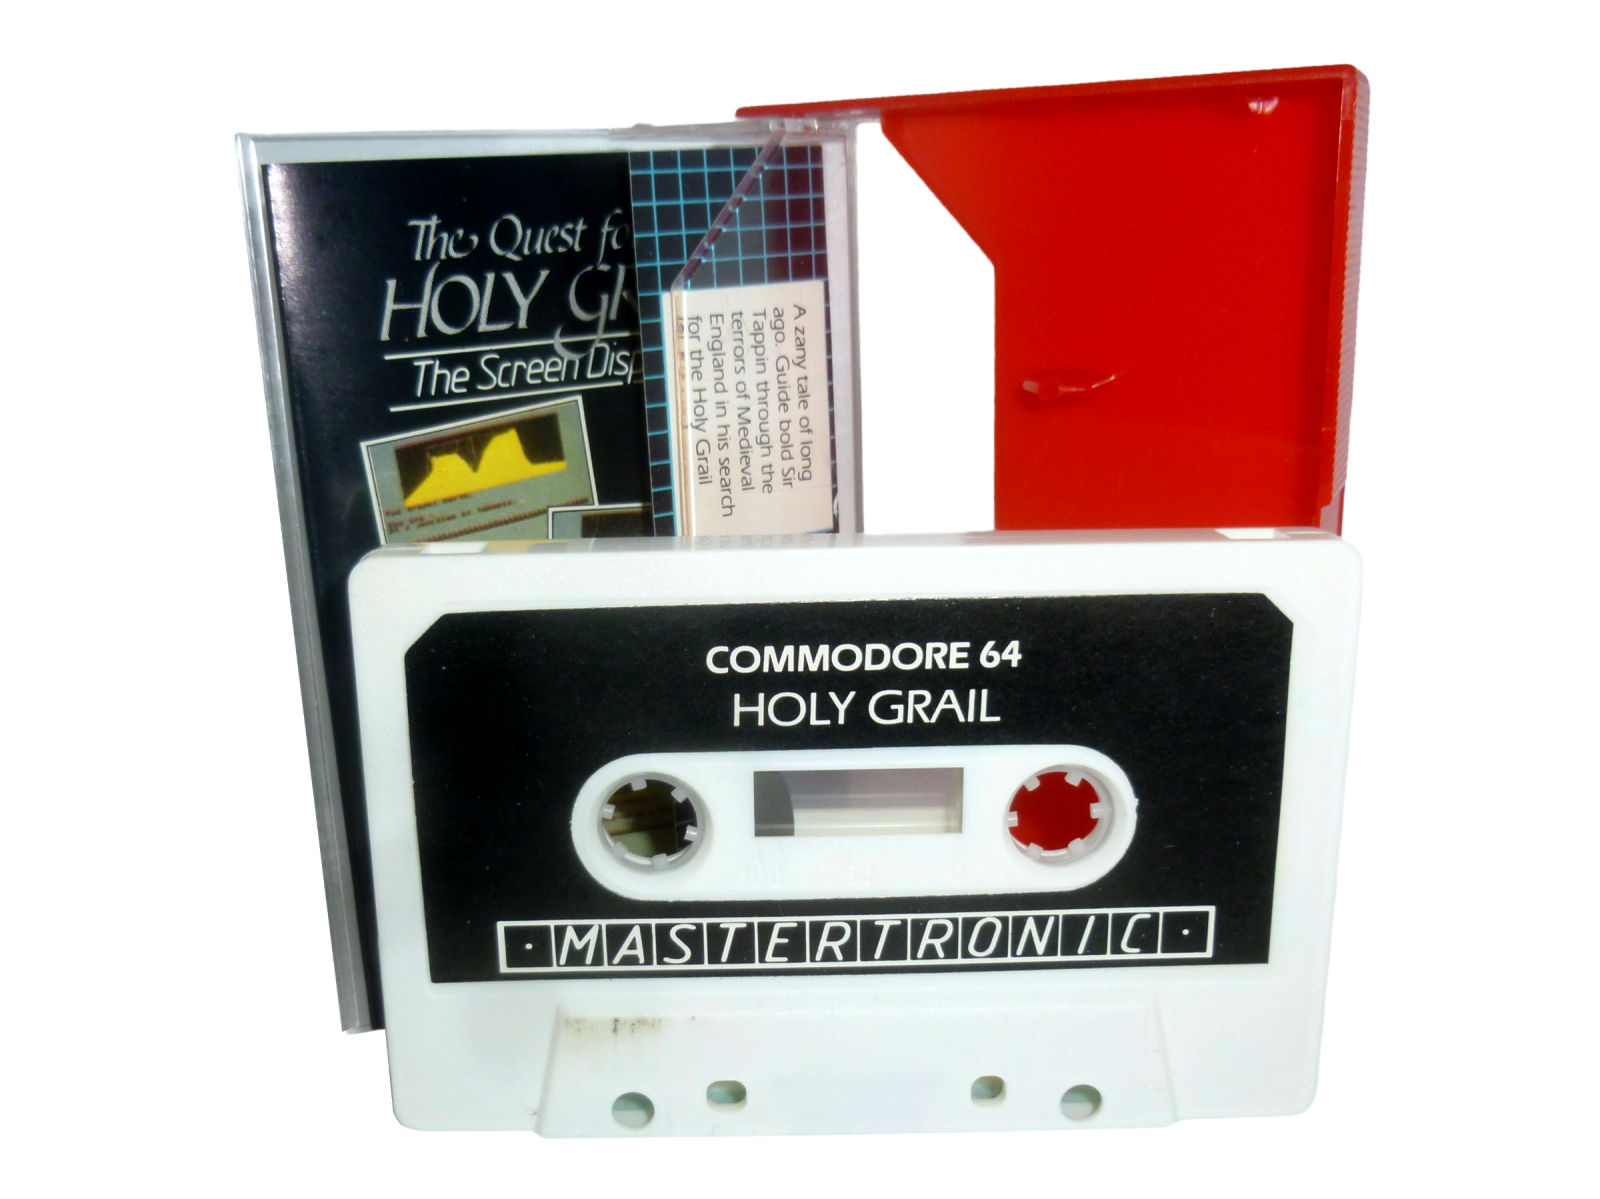 The Quest for the Holy Grail - Kassette / Datasette Mastertronic 2